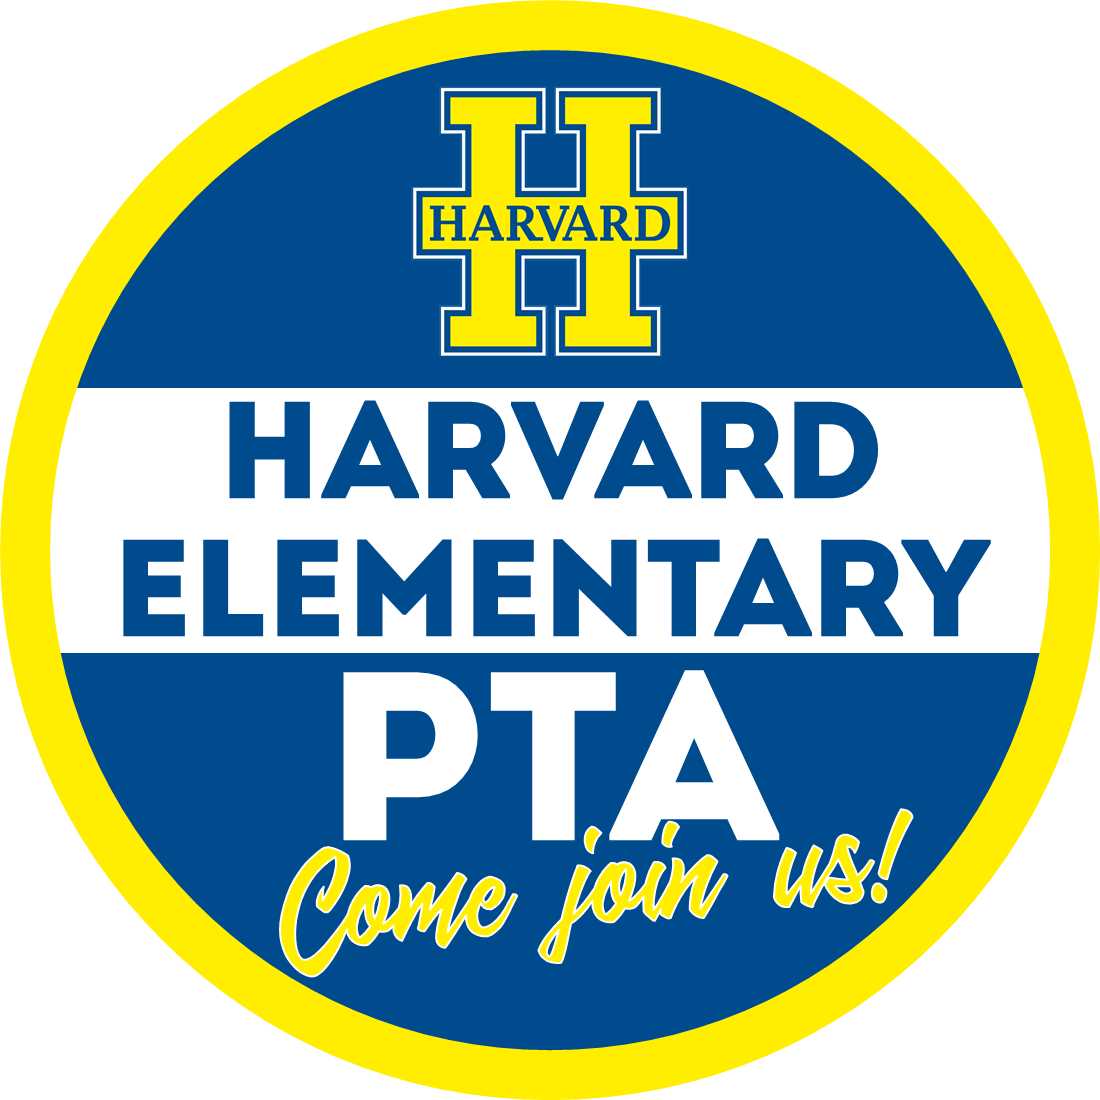 Harvard Elementary PTA